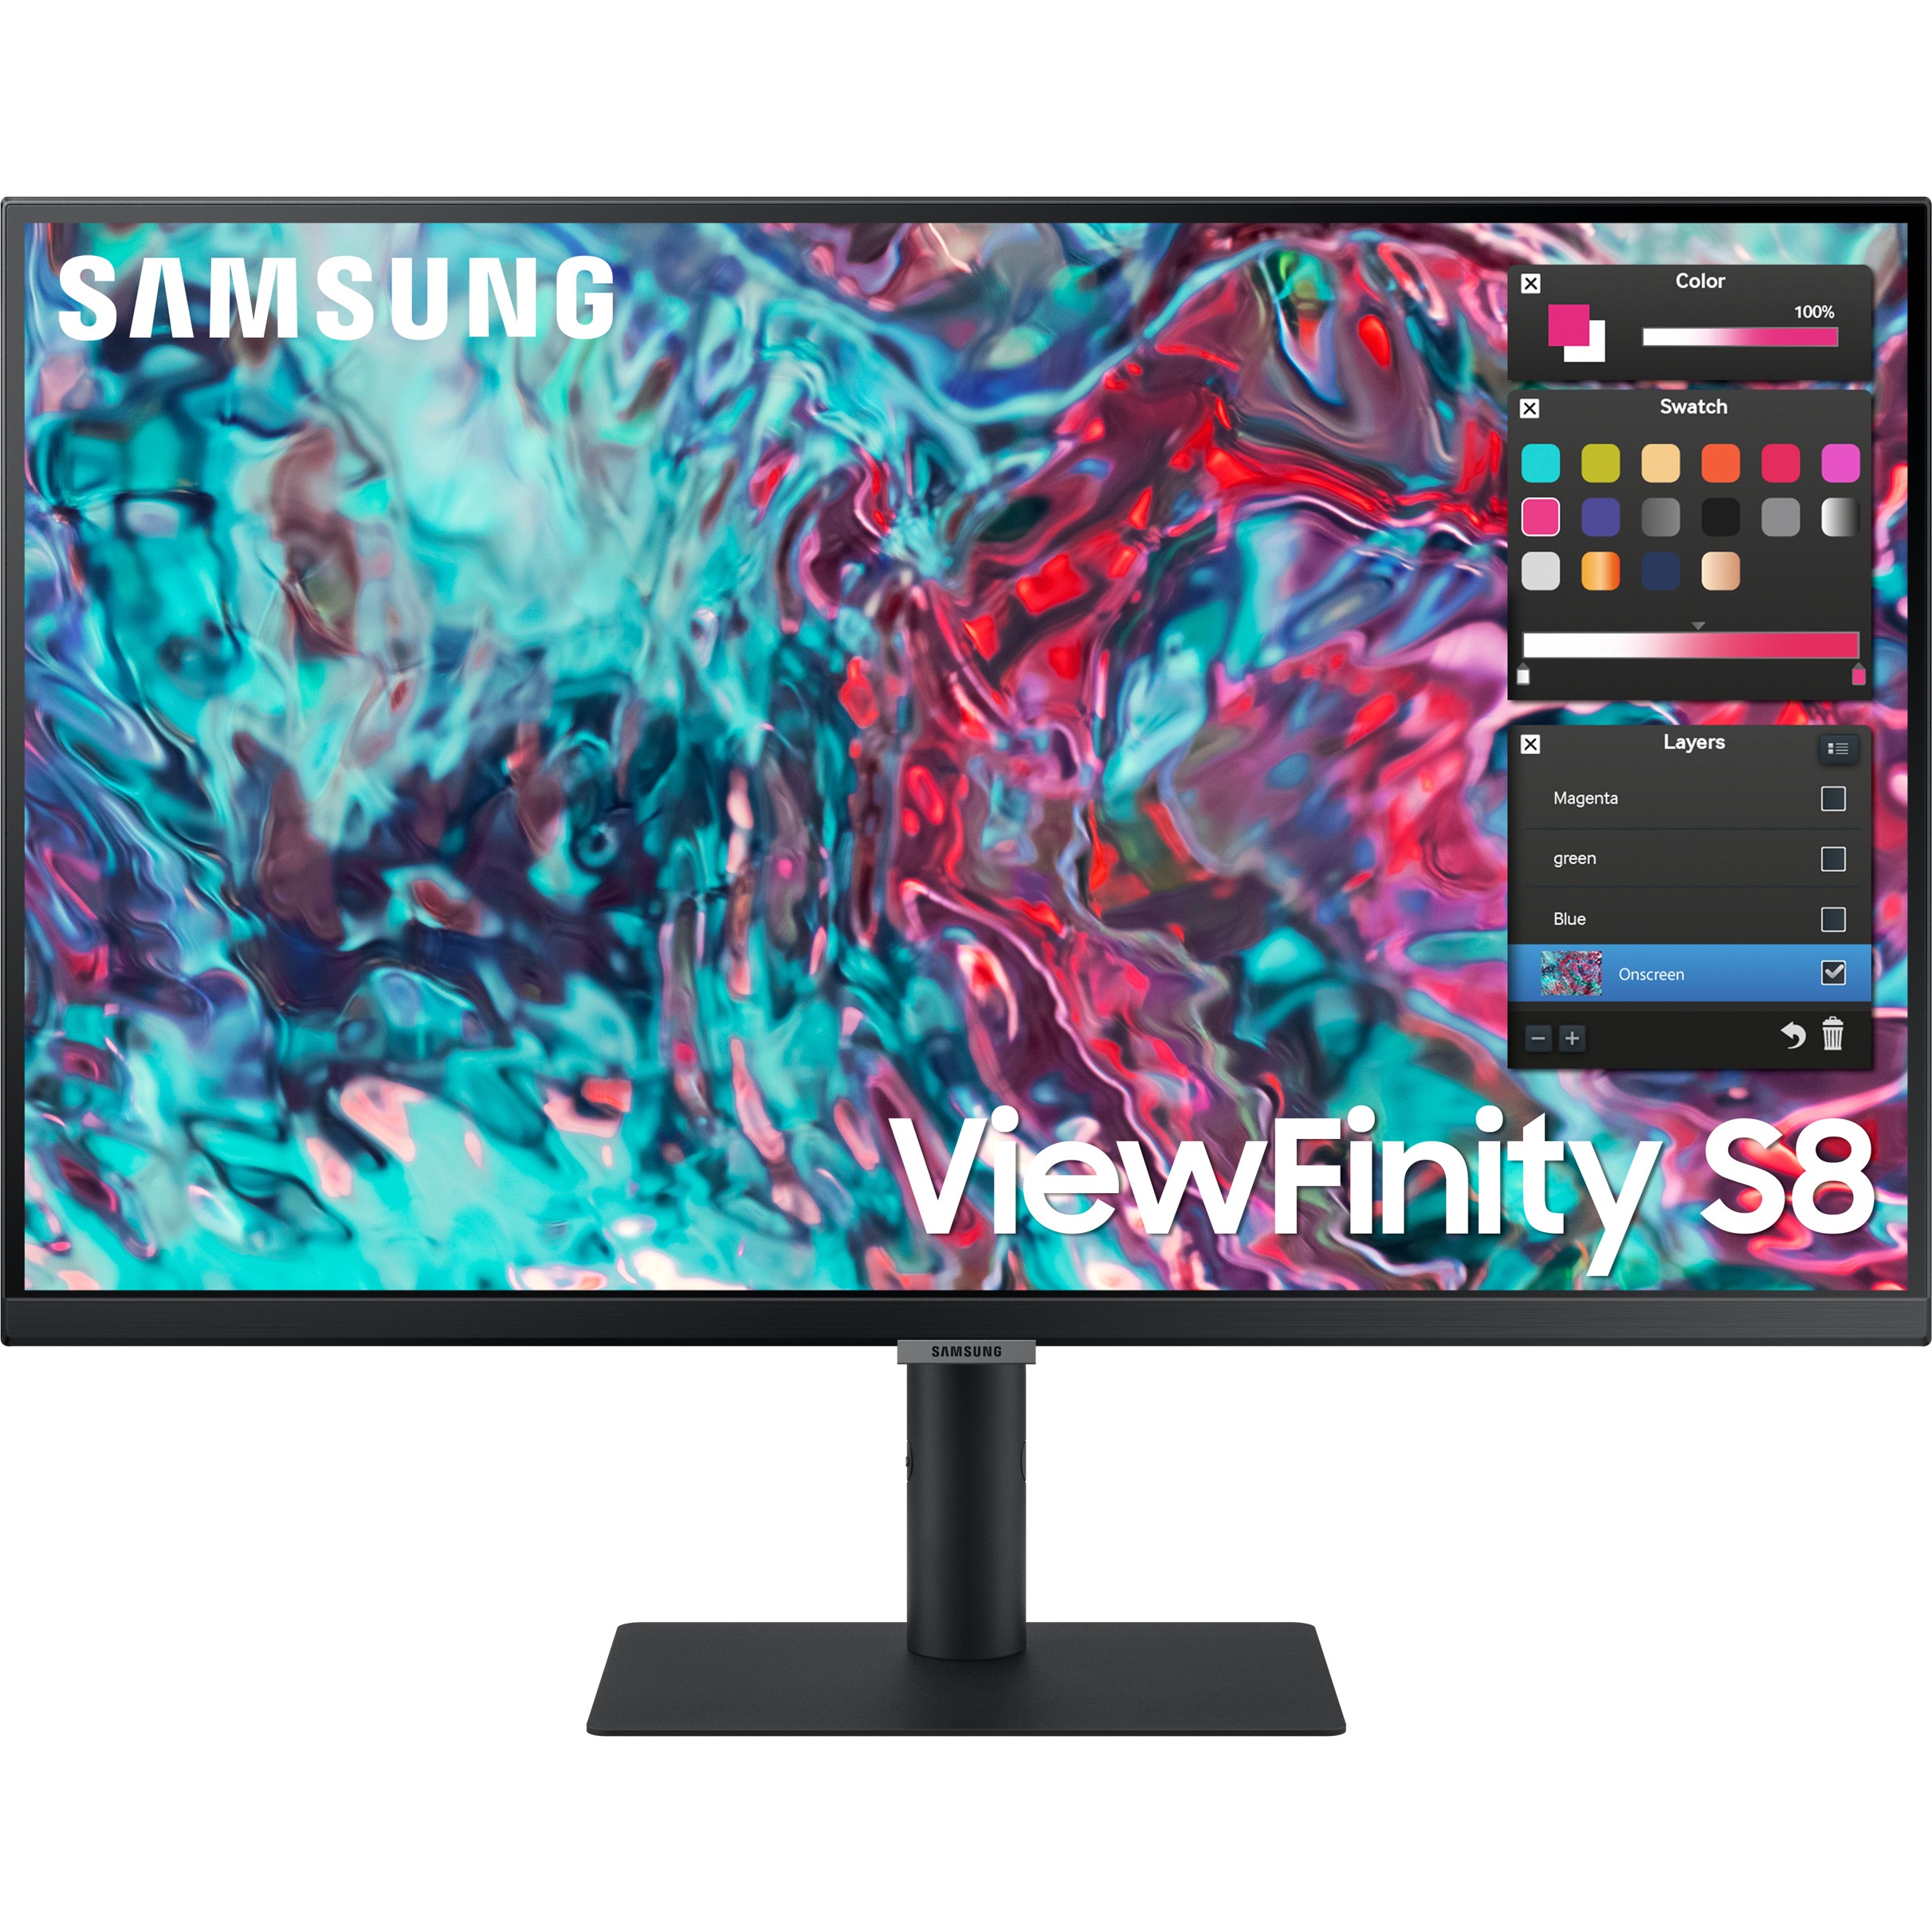 Samsung ViewFinity S80TB computer monitor